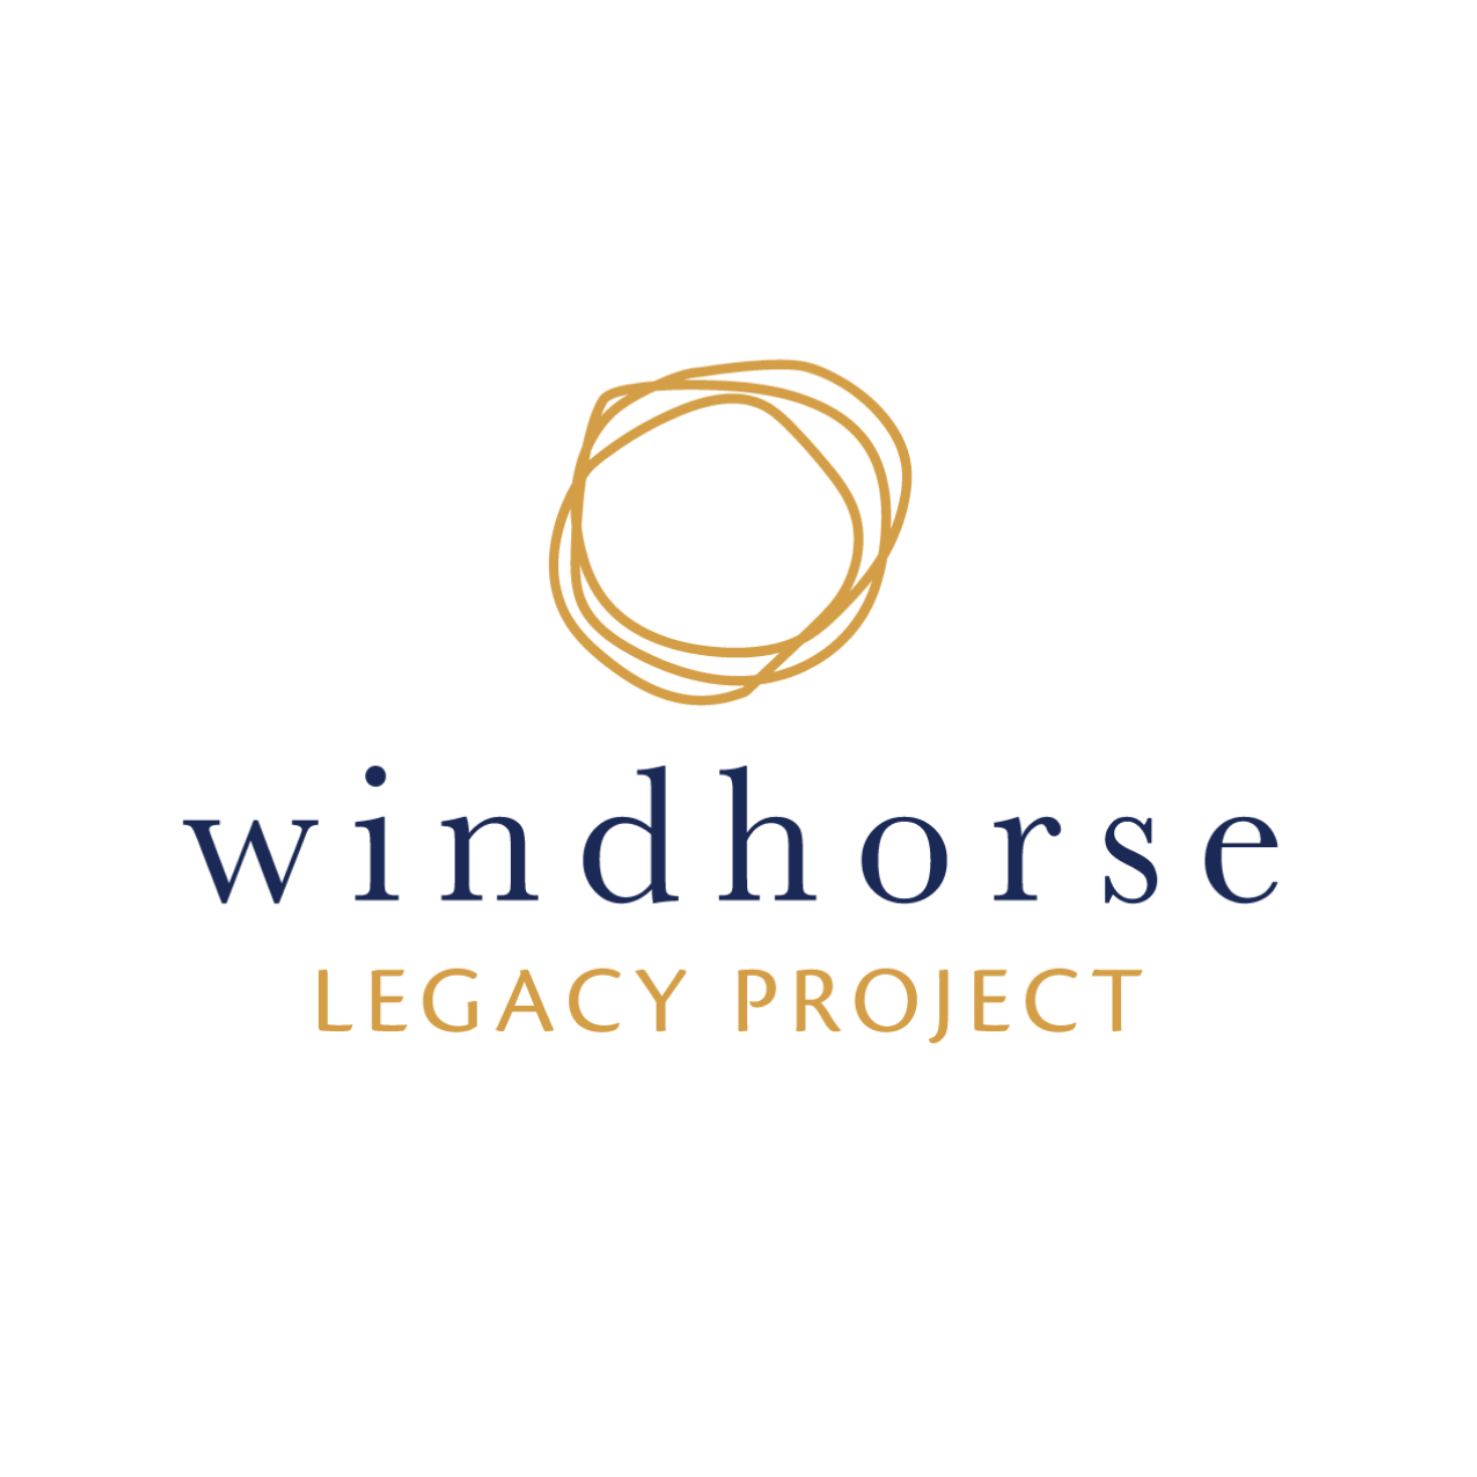 windhorse-legacy-project-logo-final-framed-square-4web.png